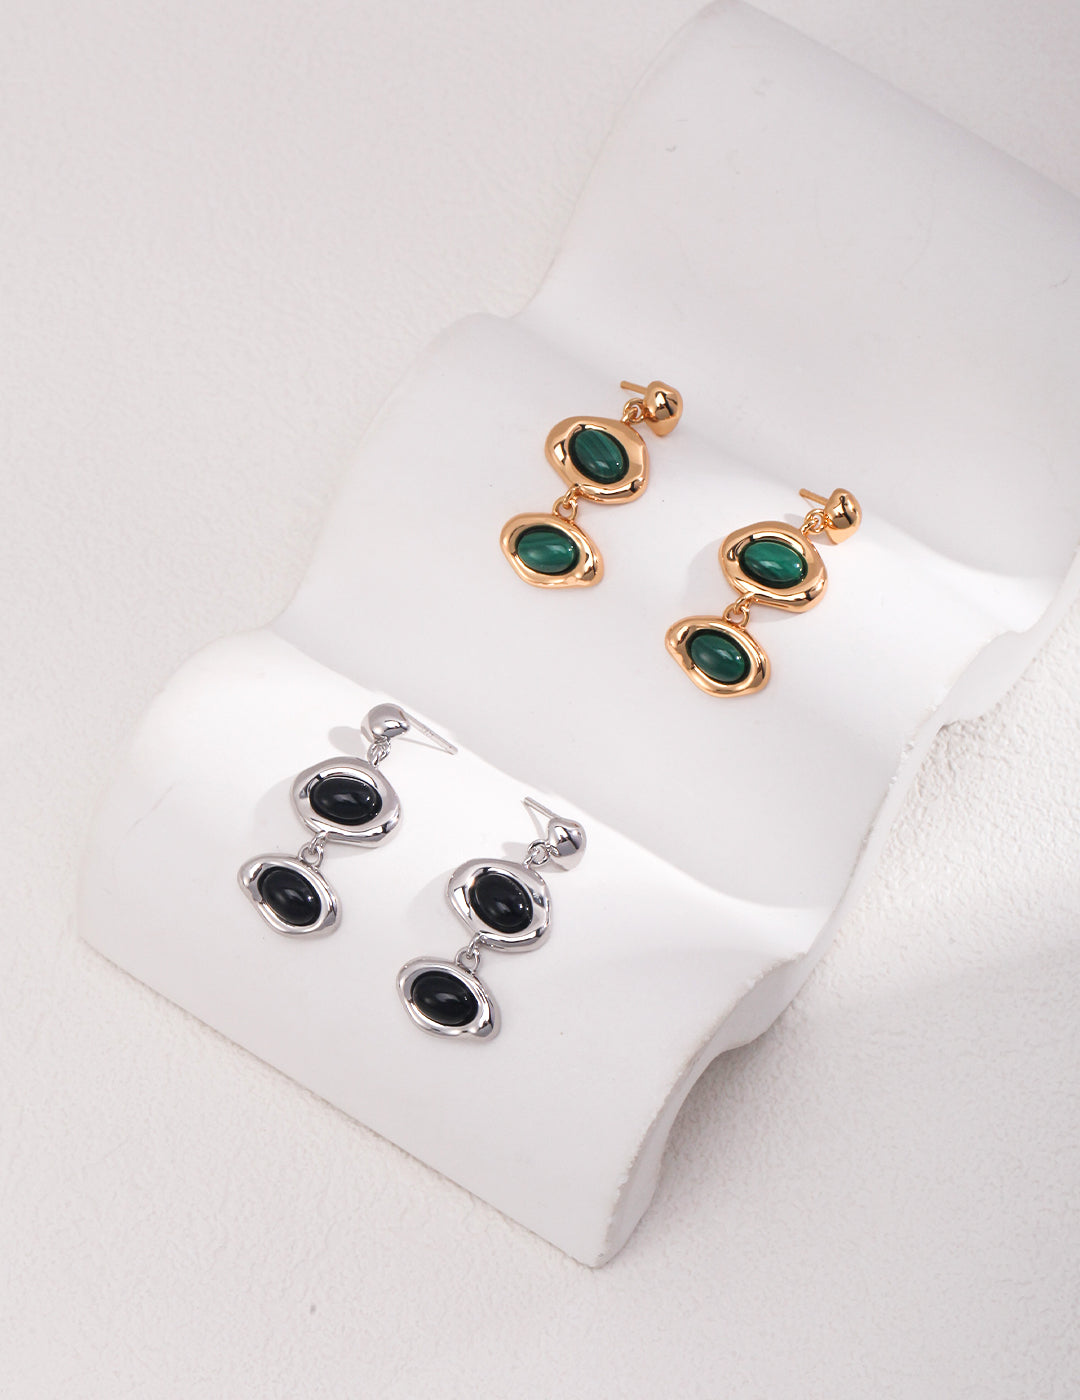 Peacock stone earrings